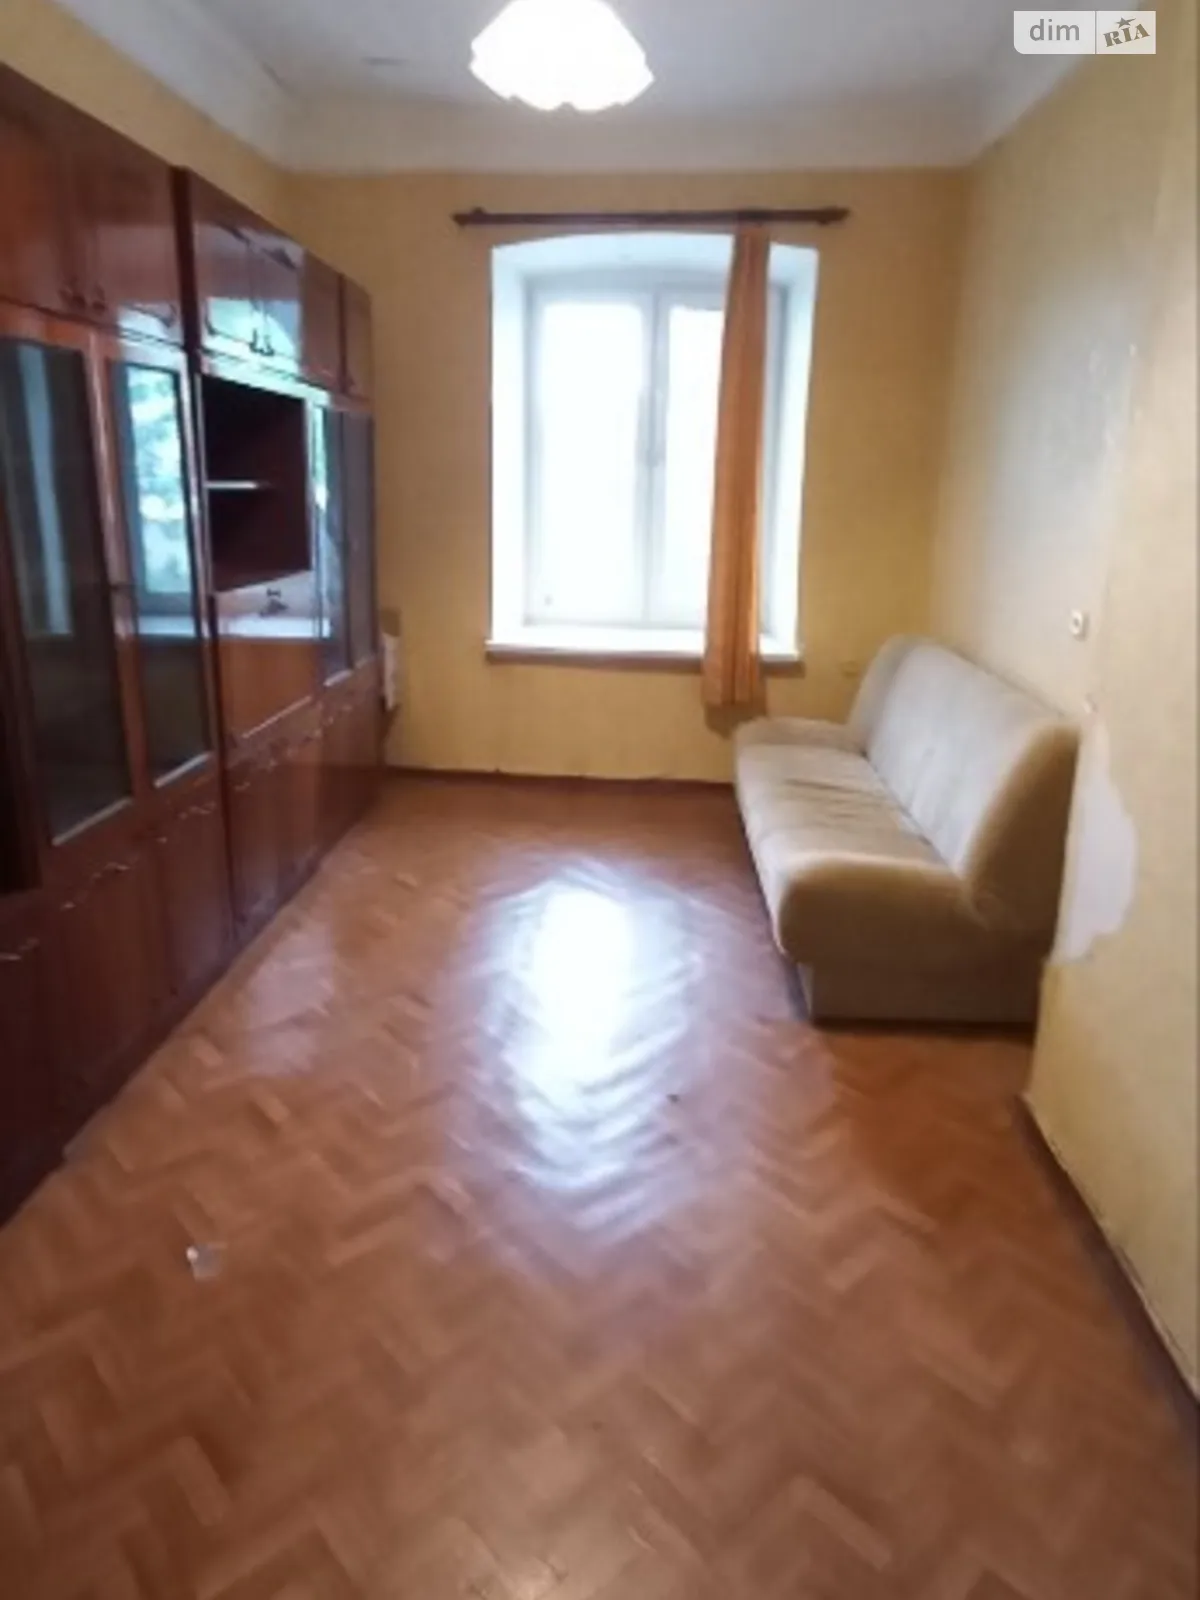 Продается комната 34 кв. м в Одессе, цена: 15000 $ - фото 1